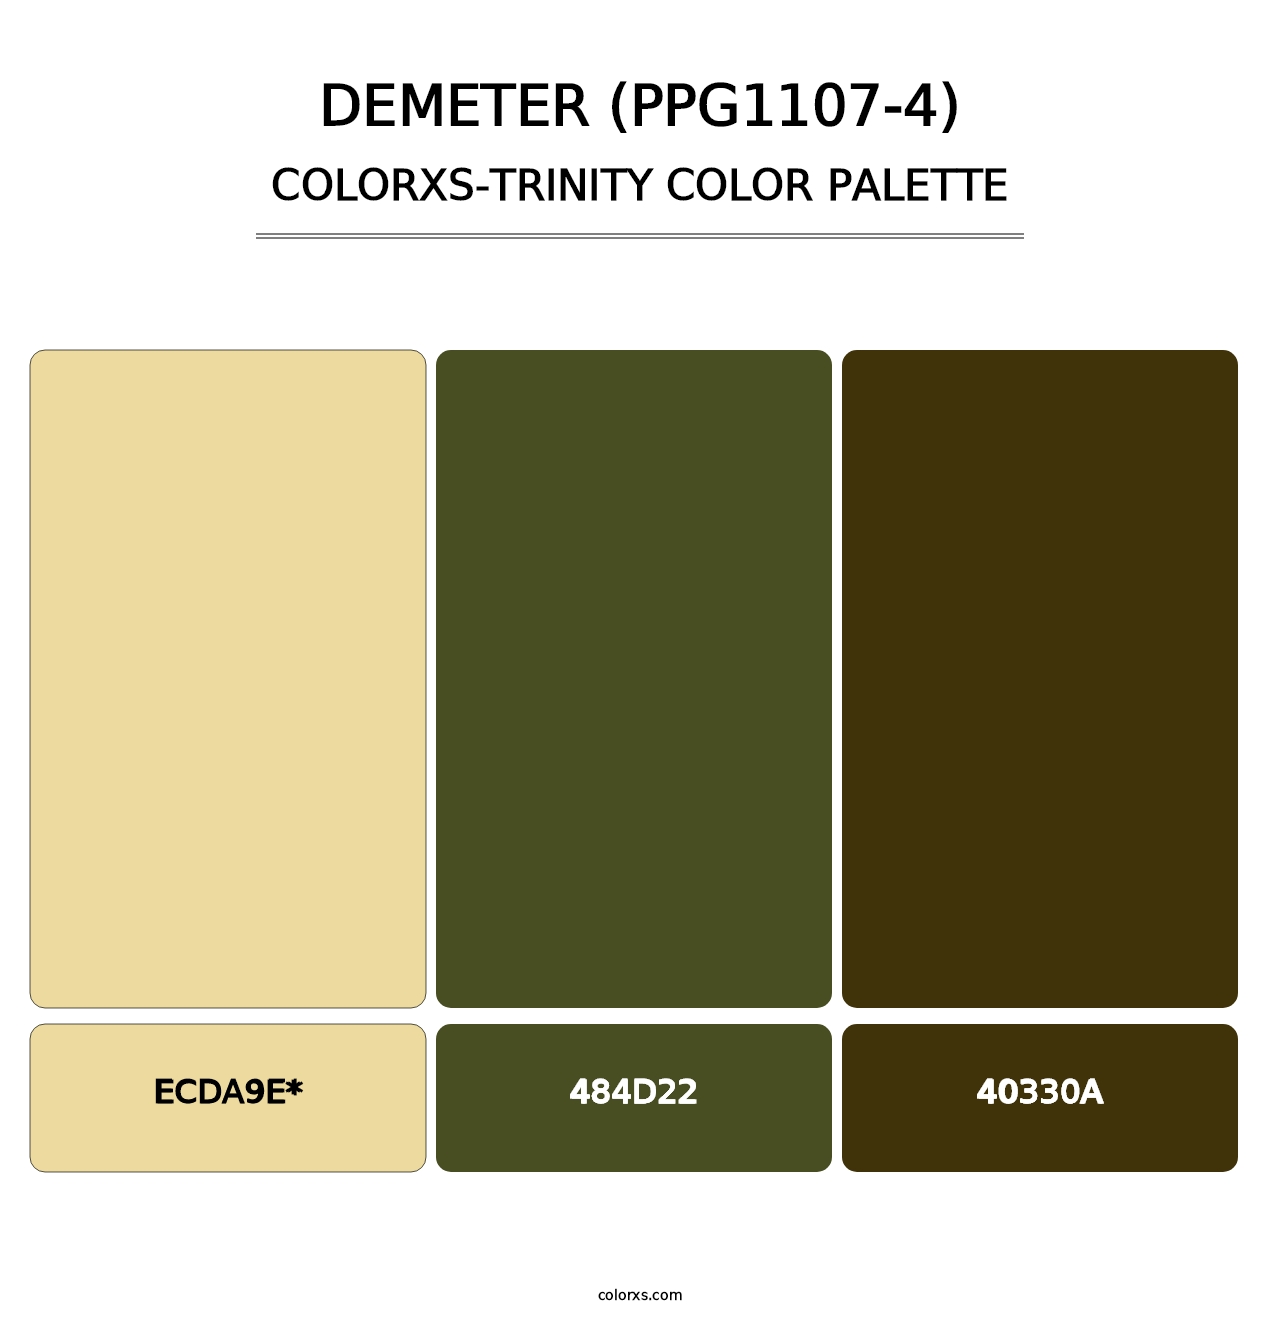 Demeter (PPG1107-4) - Colorxs Trinity Palette